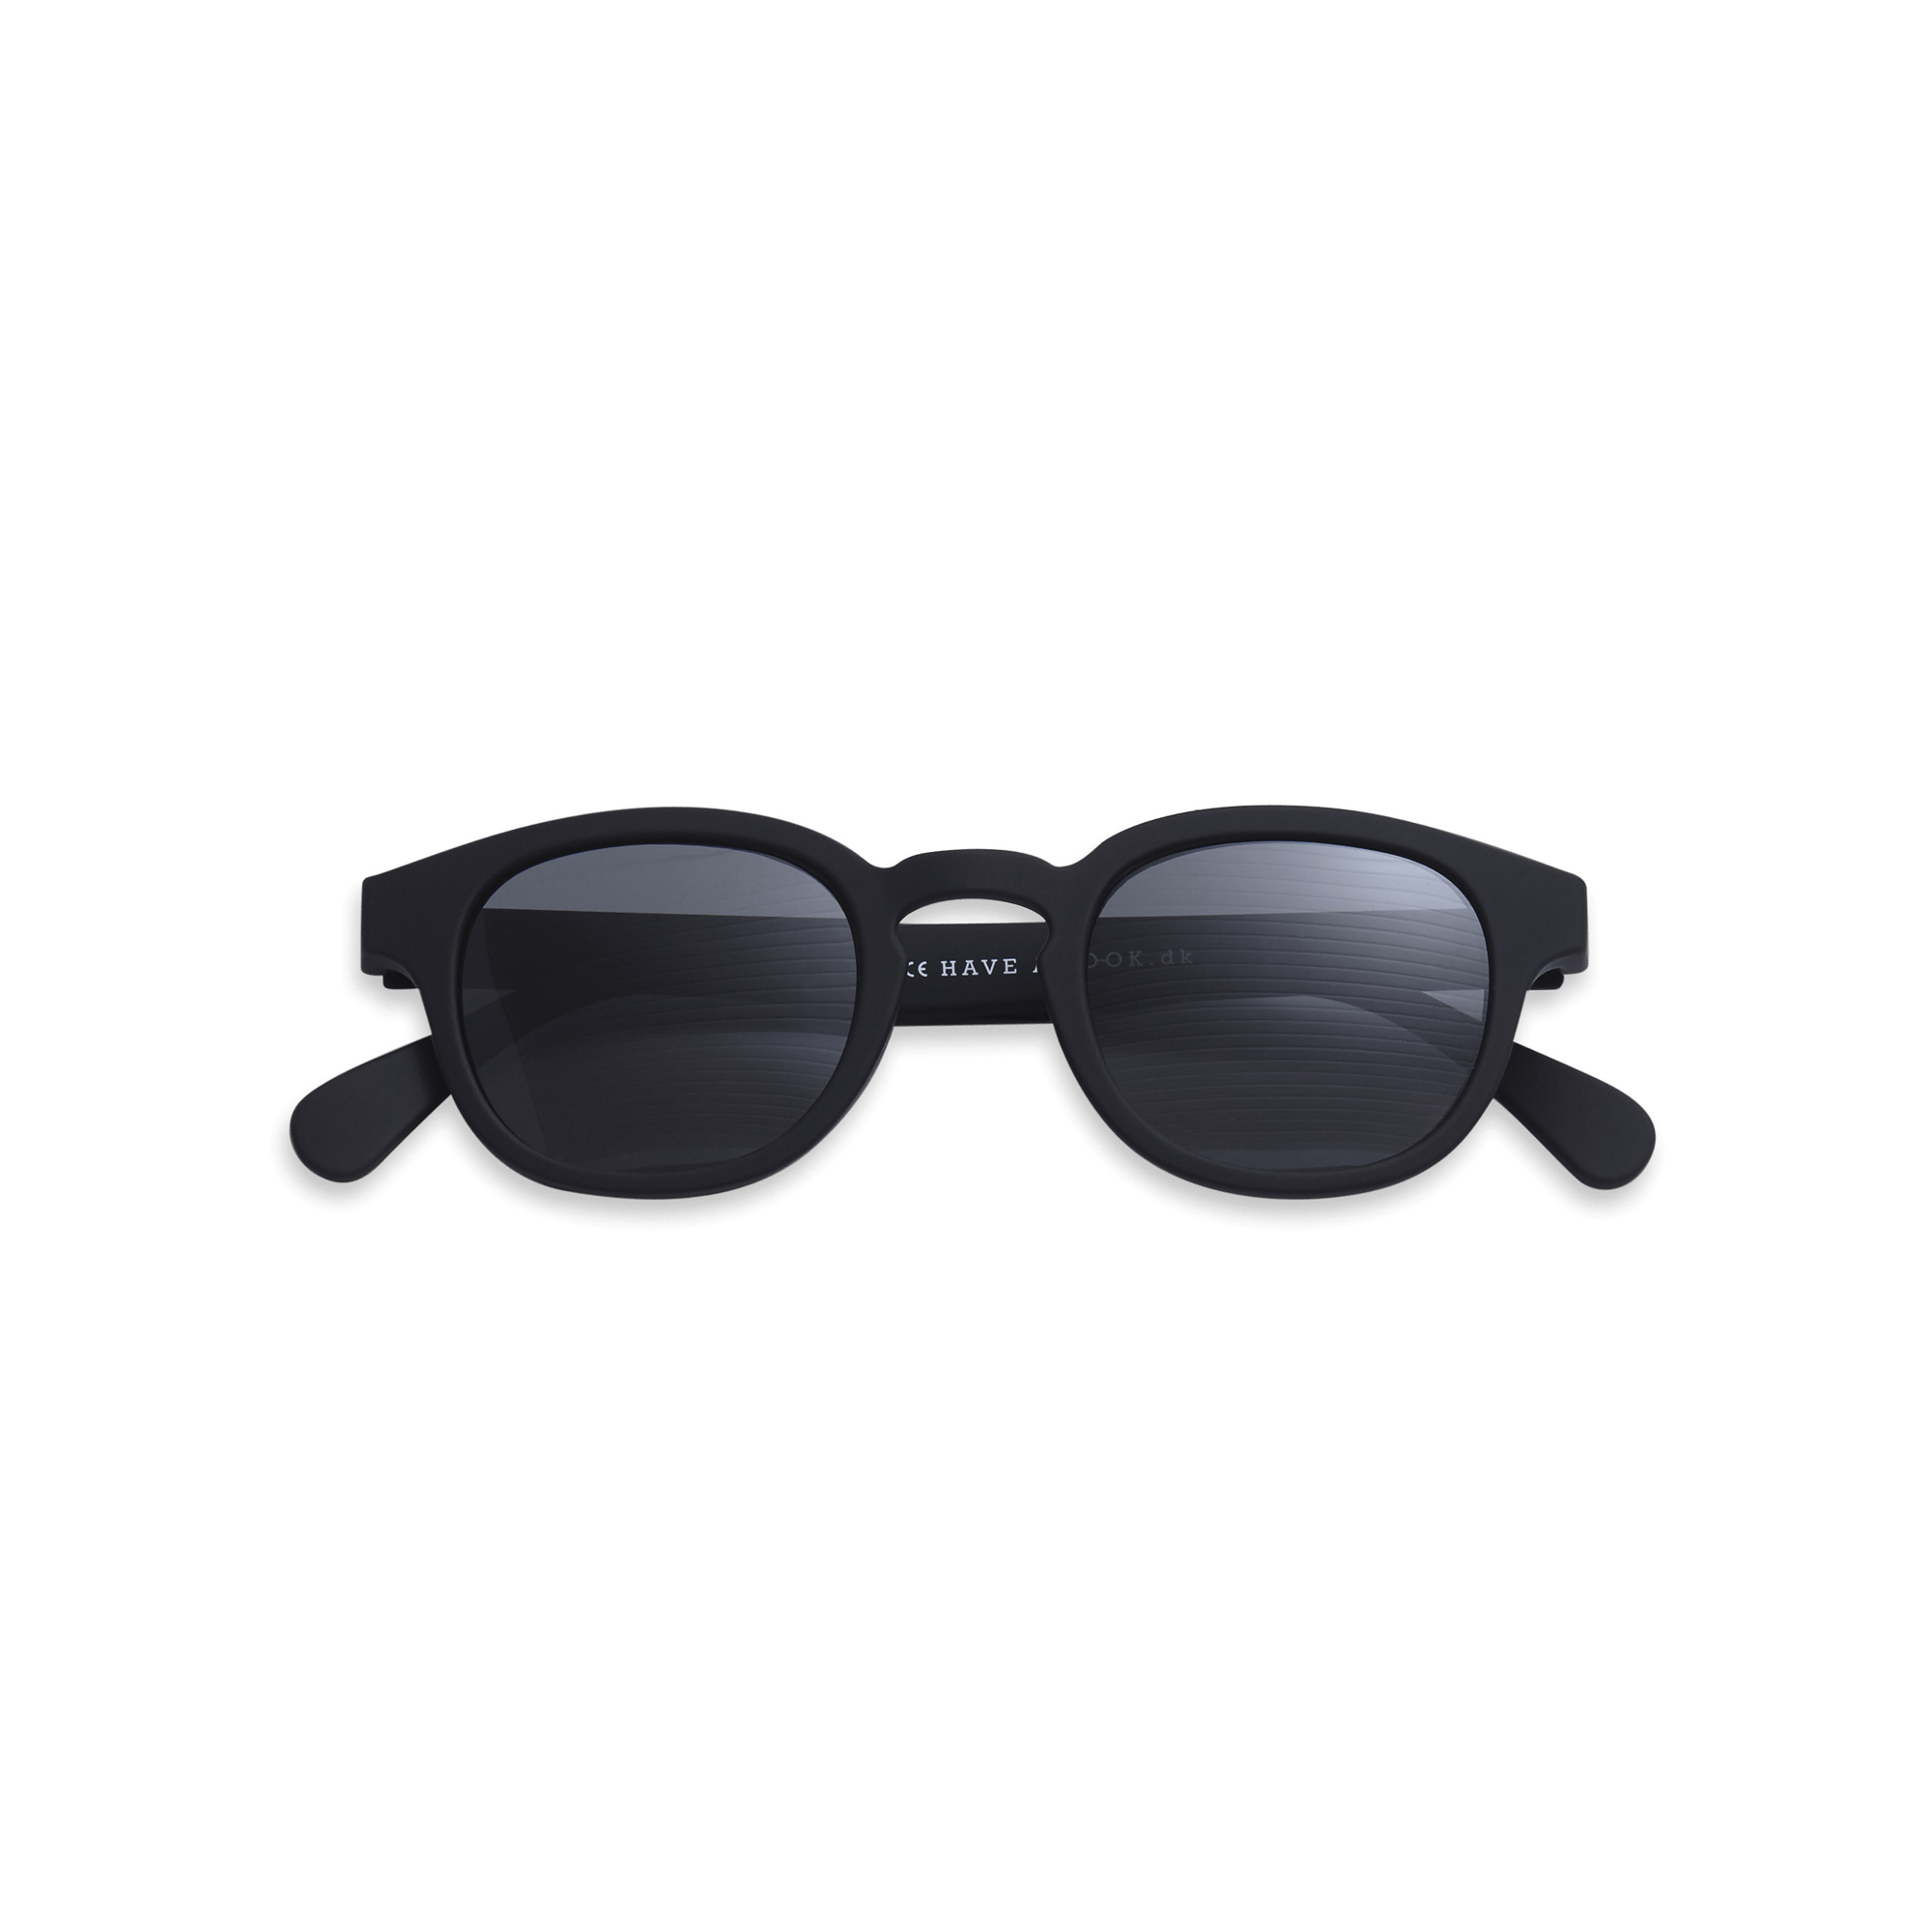 Sonnenbrillen Type C - black aus Have A Look